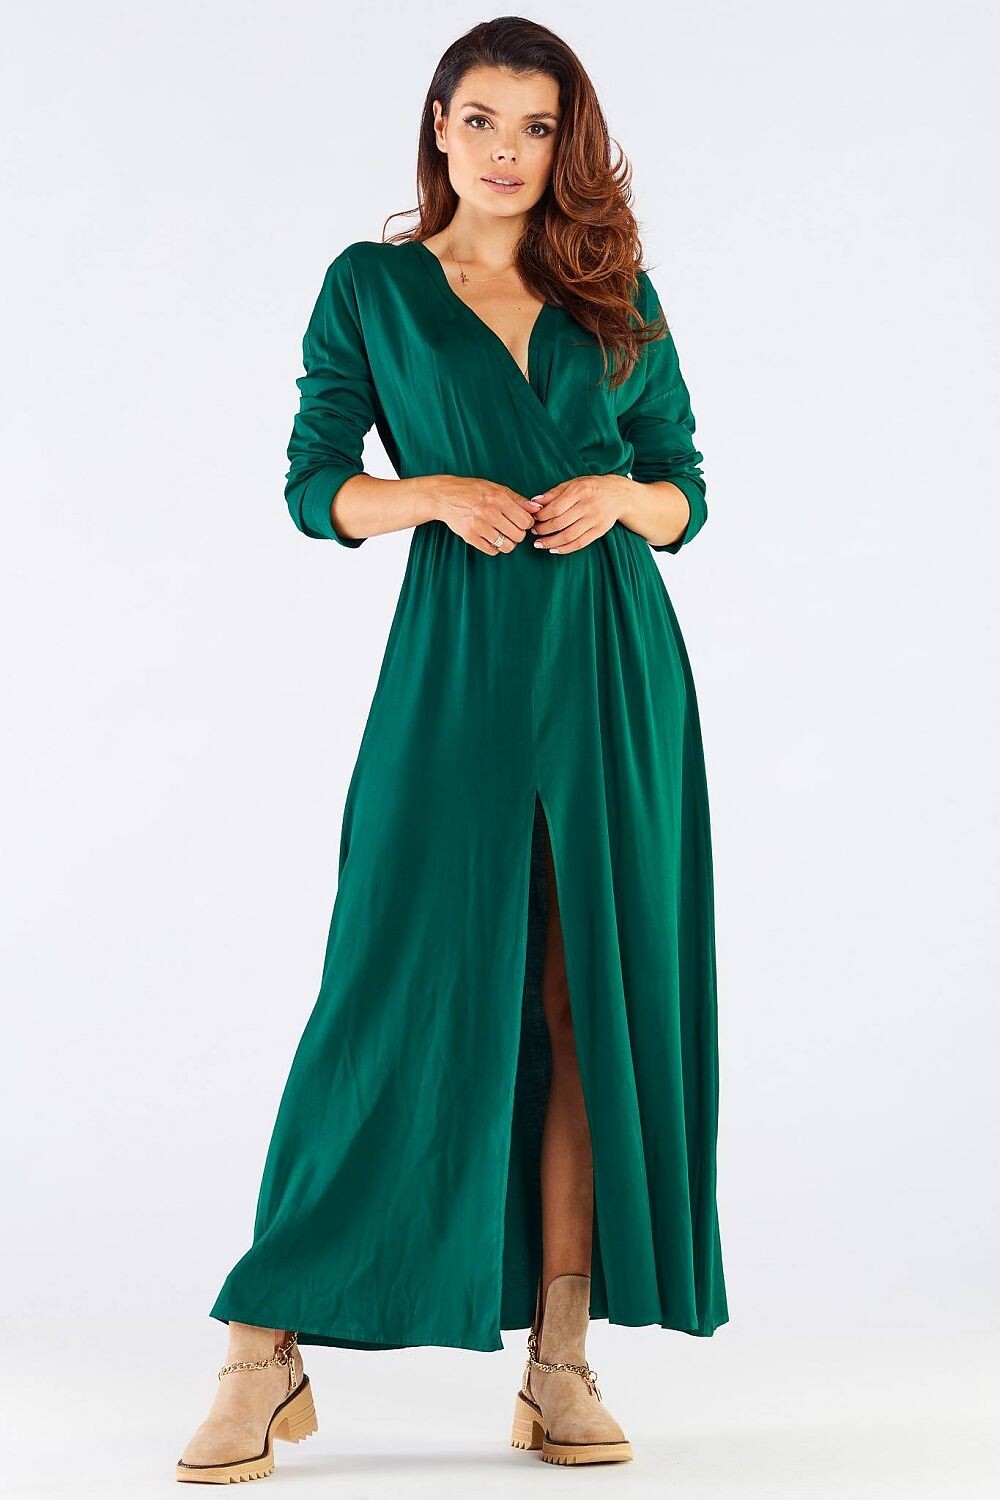 Dámské šaty A454 zelené - Awama L-40